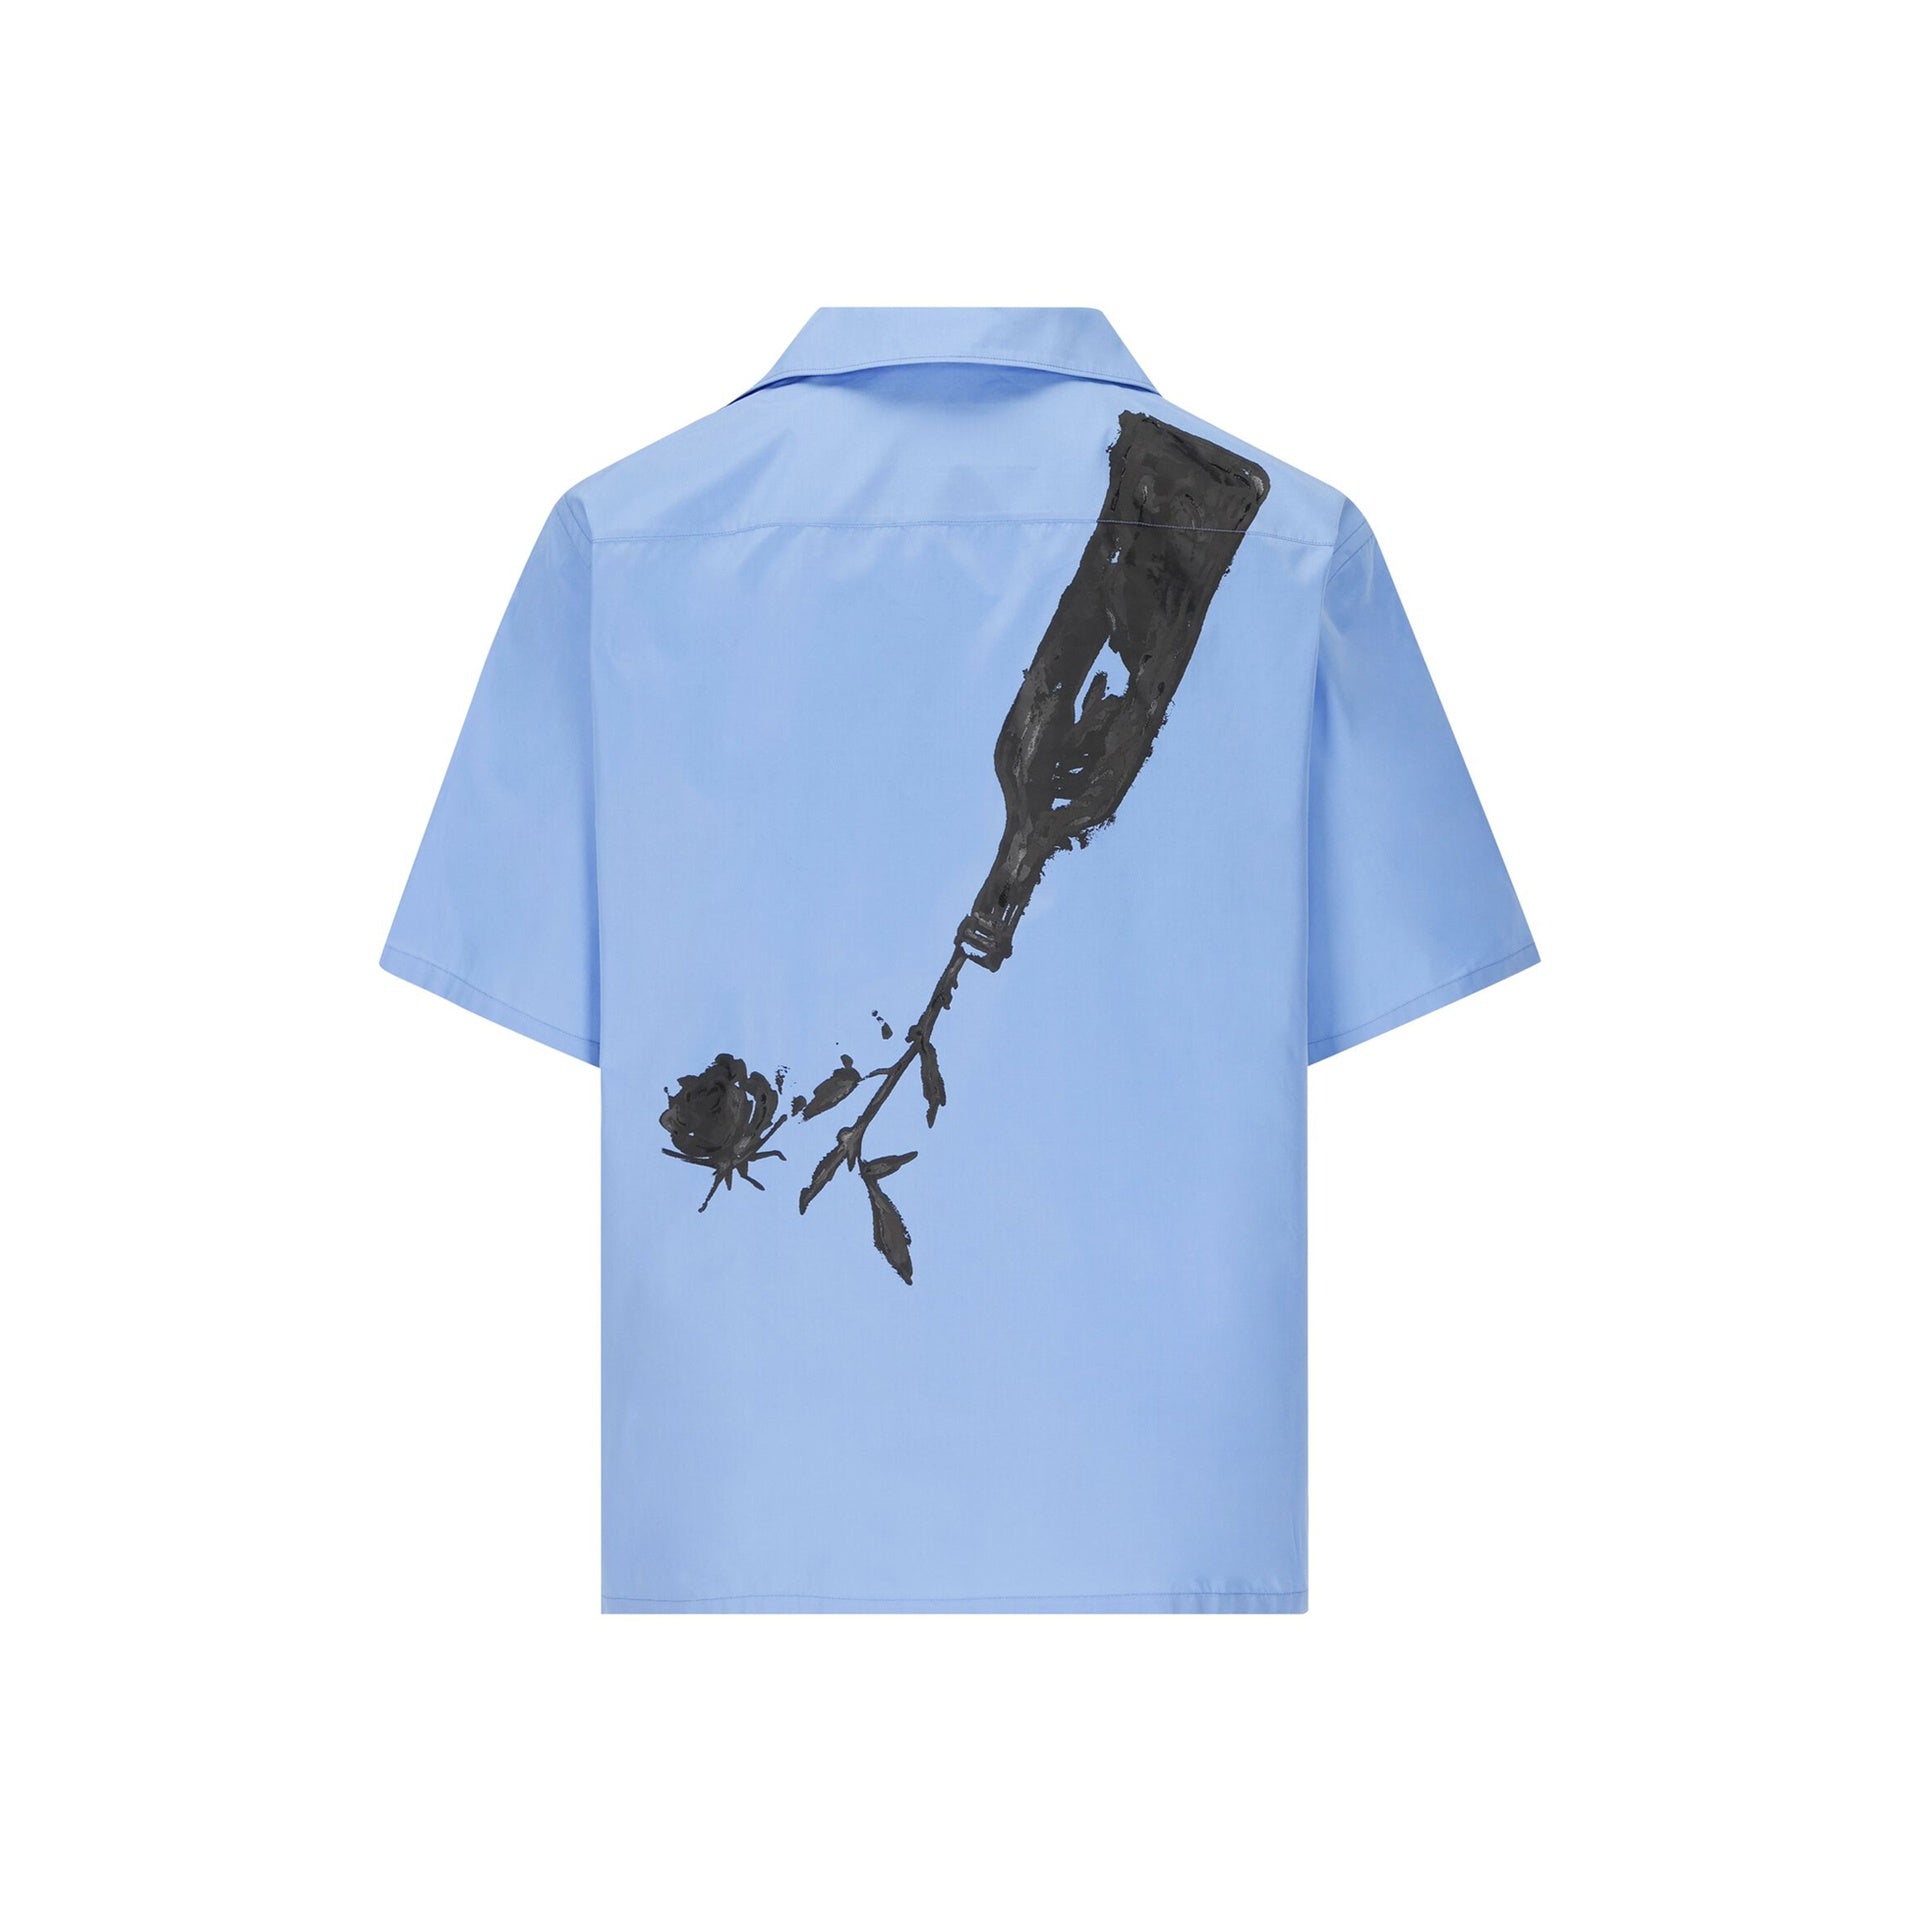 PRADA-Outlet-Sale-Prada Printed Cotton Shirt-MEN CLOTHING-ARCHIVIST